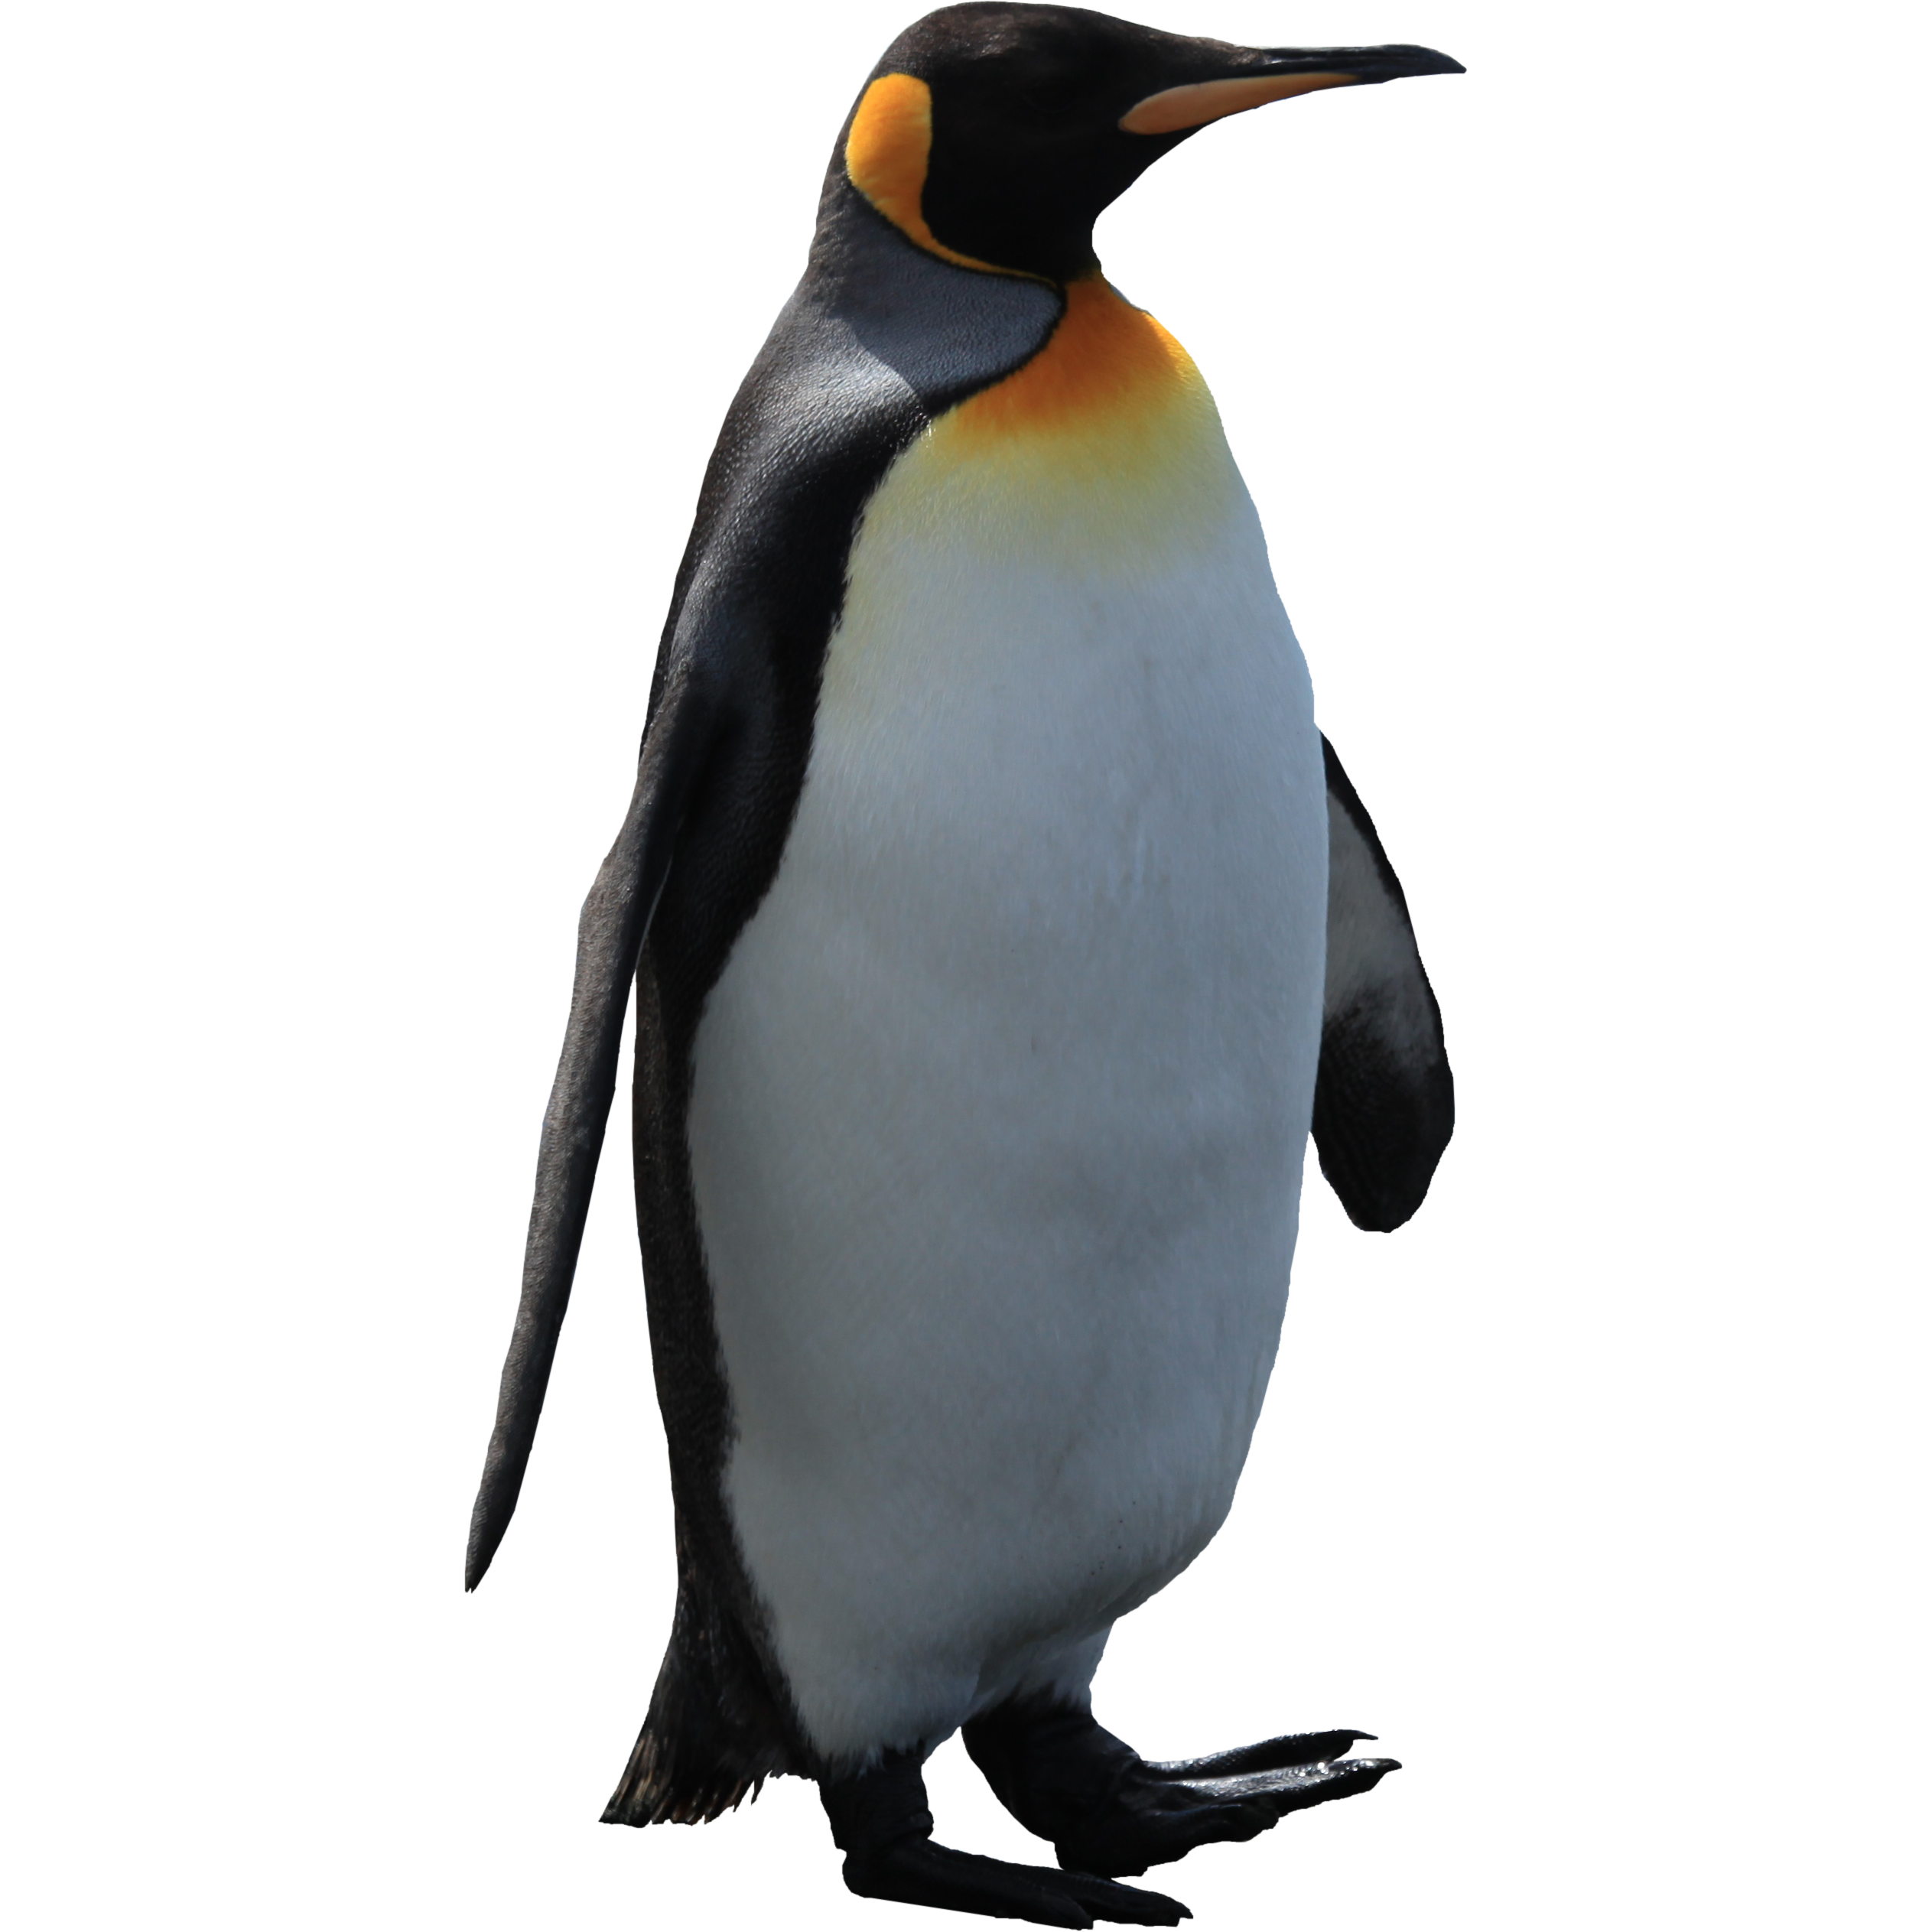 Madagascar penguin PNG image